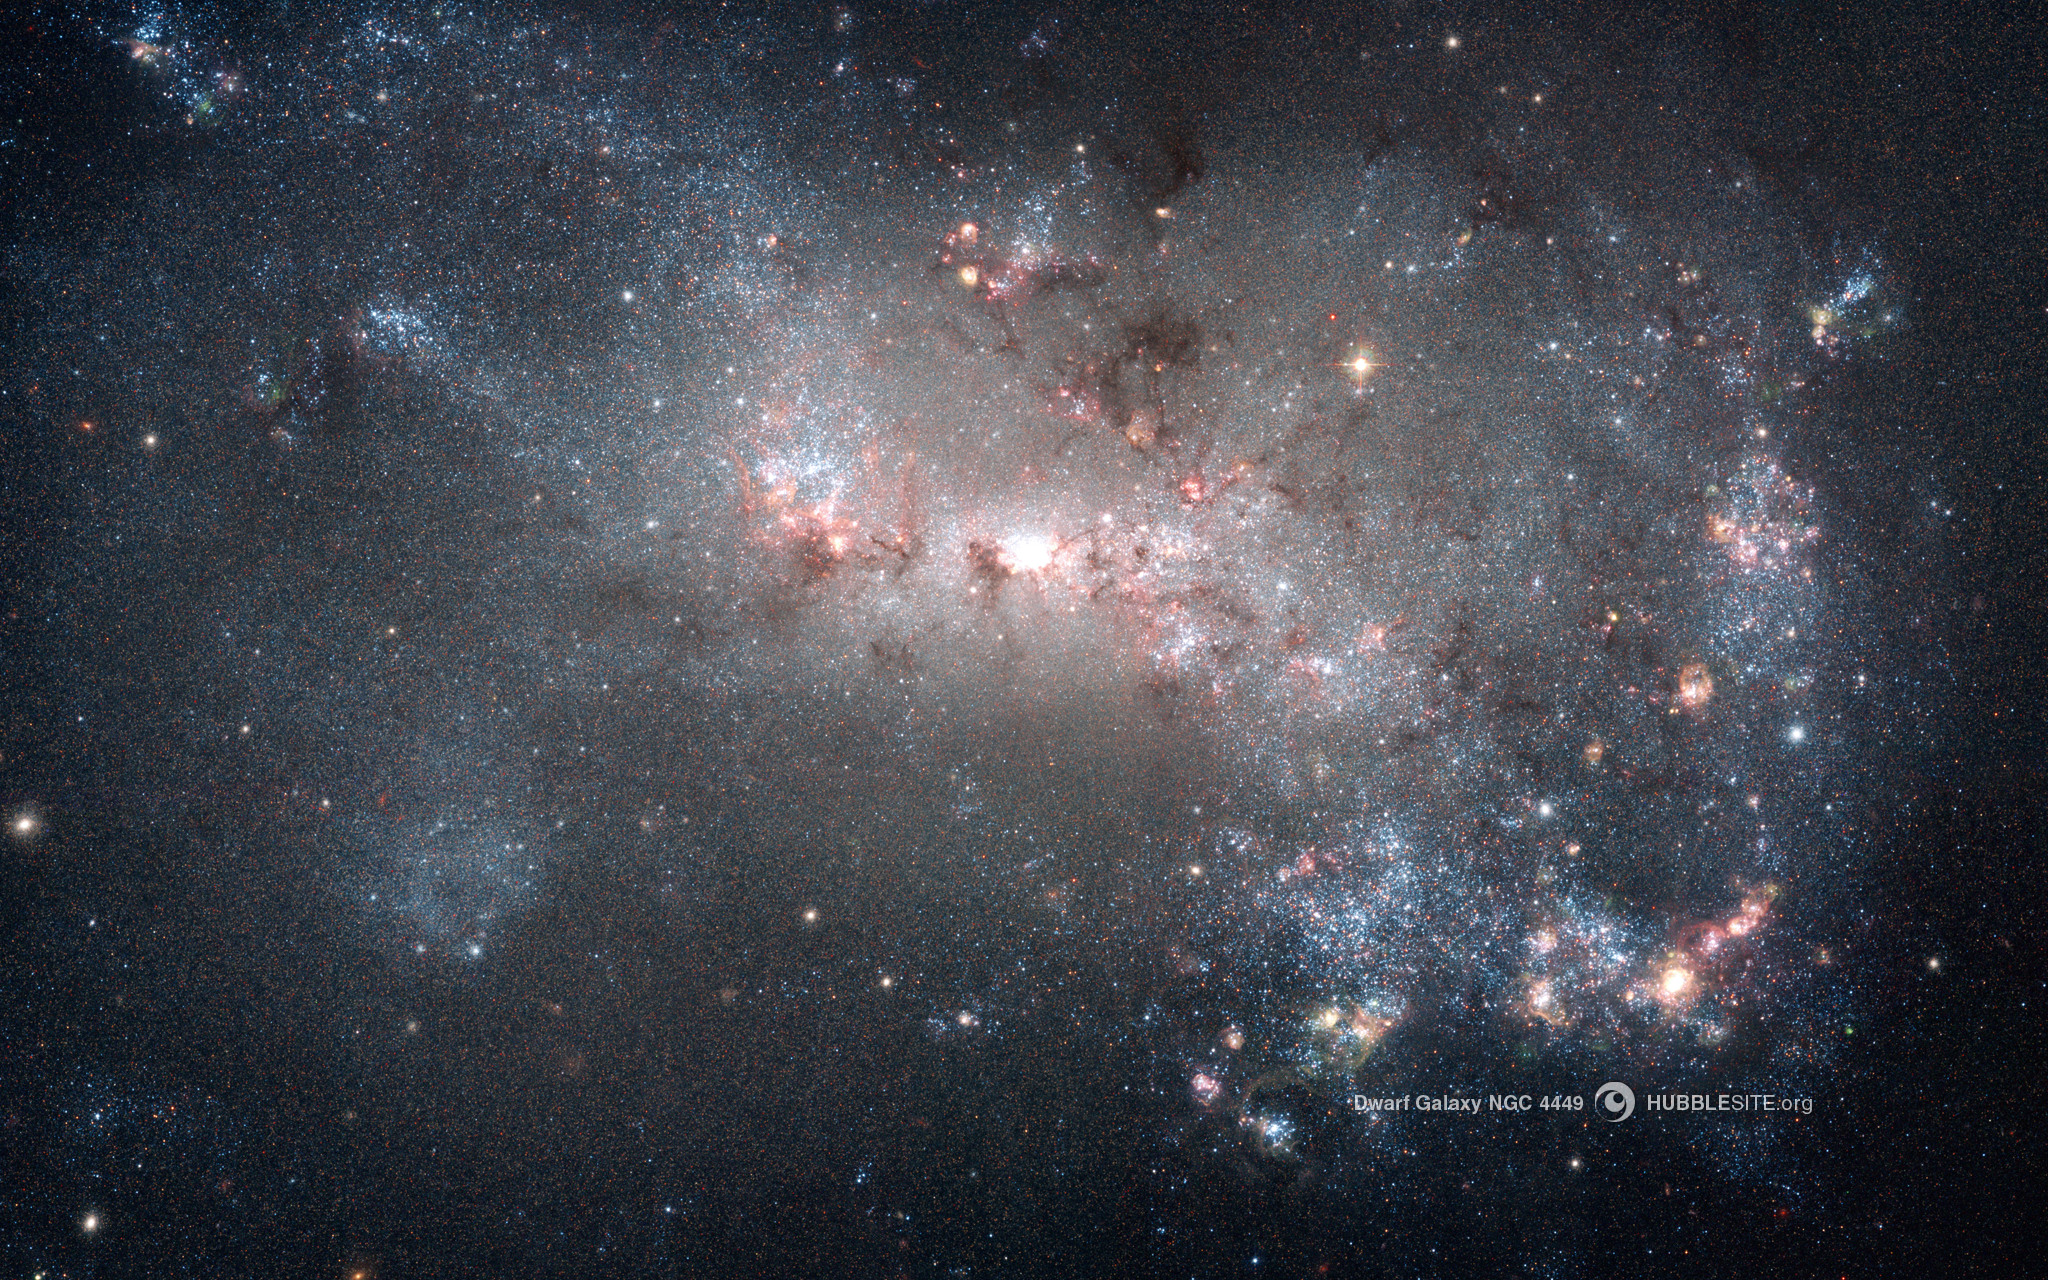 Dwarf Galaxy NGC 4449